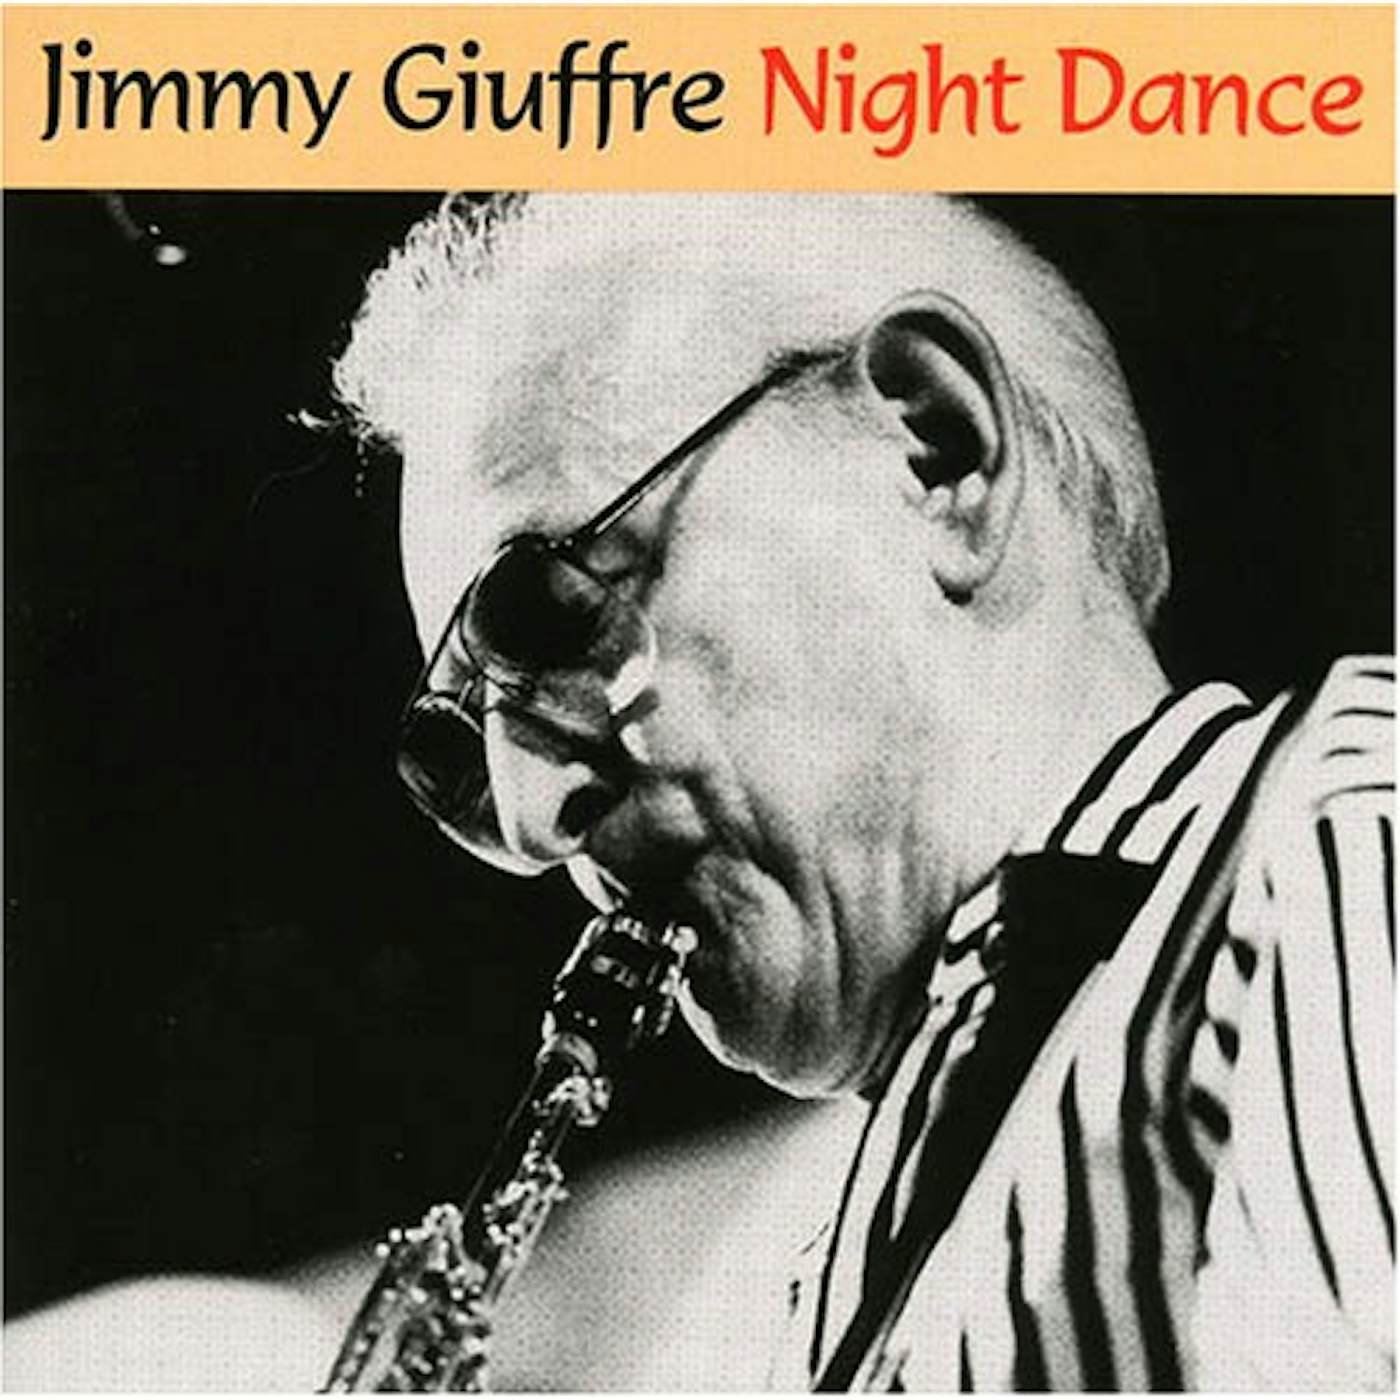 Jimmy Giuffre NIGHT DANCE CD